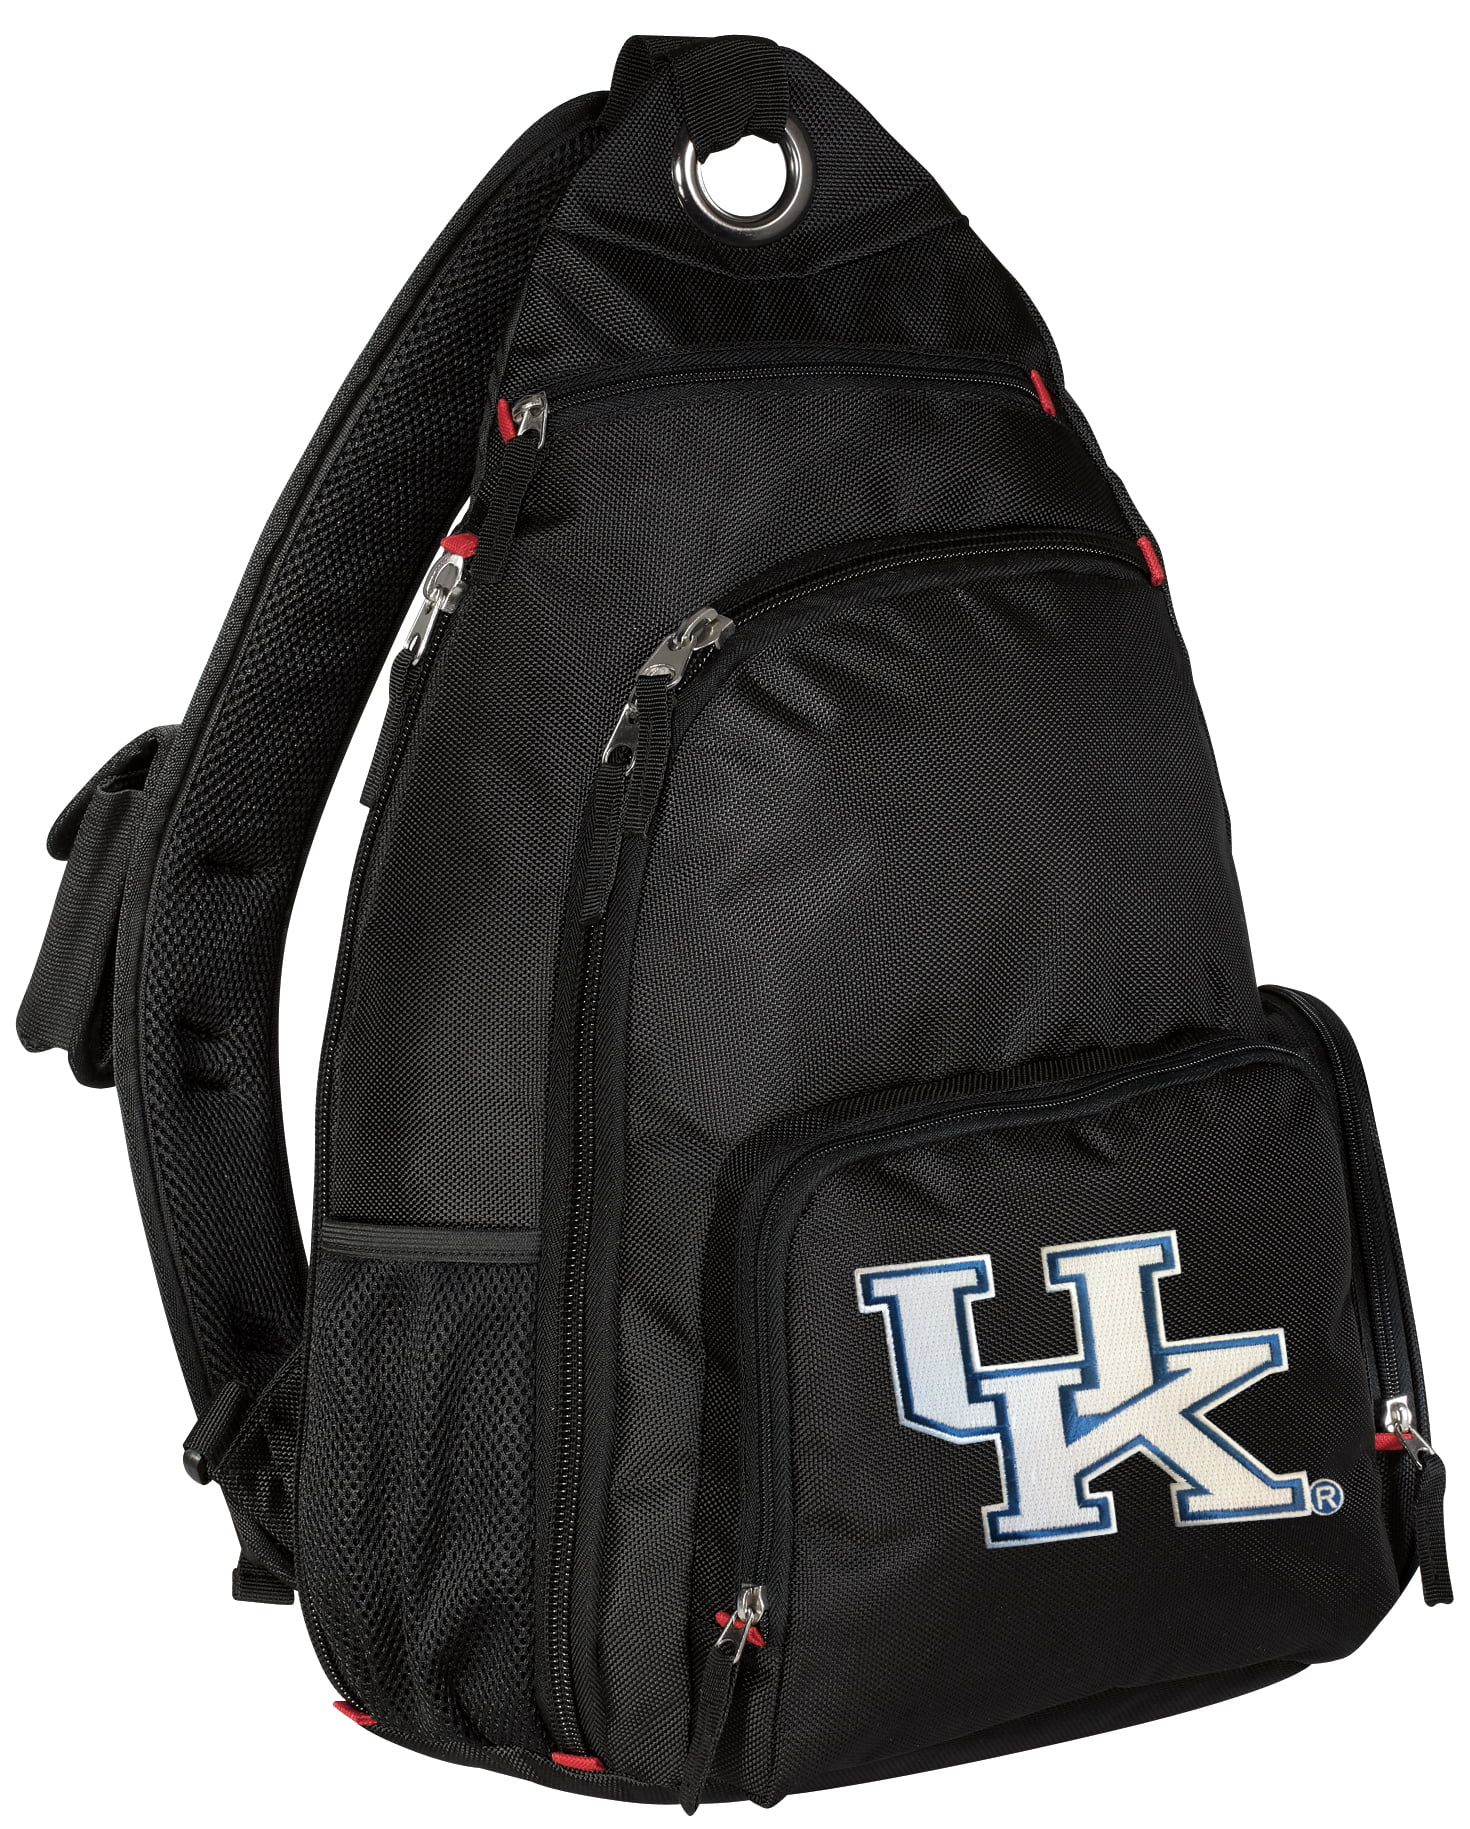 University of Kentucky Backpack BEST Kentucky Wildcats Laptop Computer Bags For 